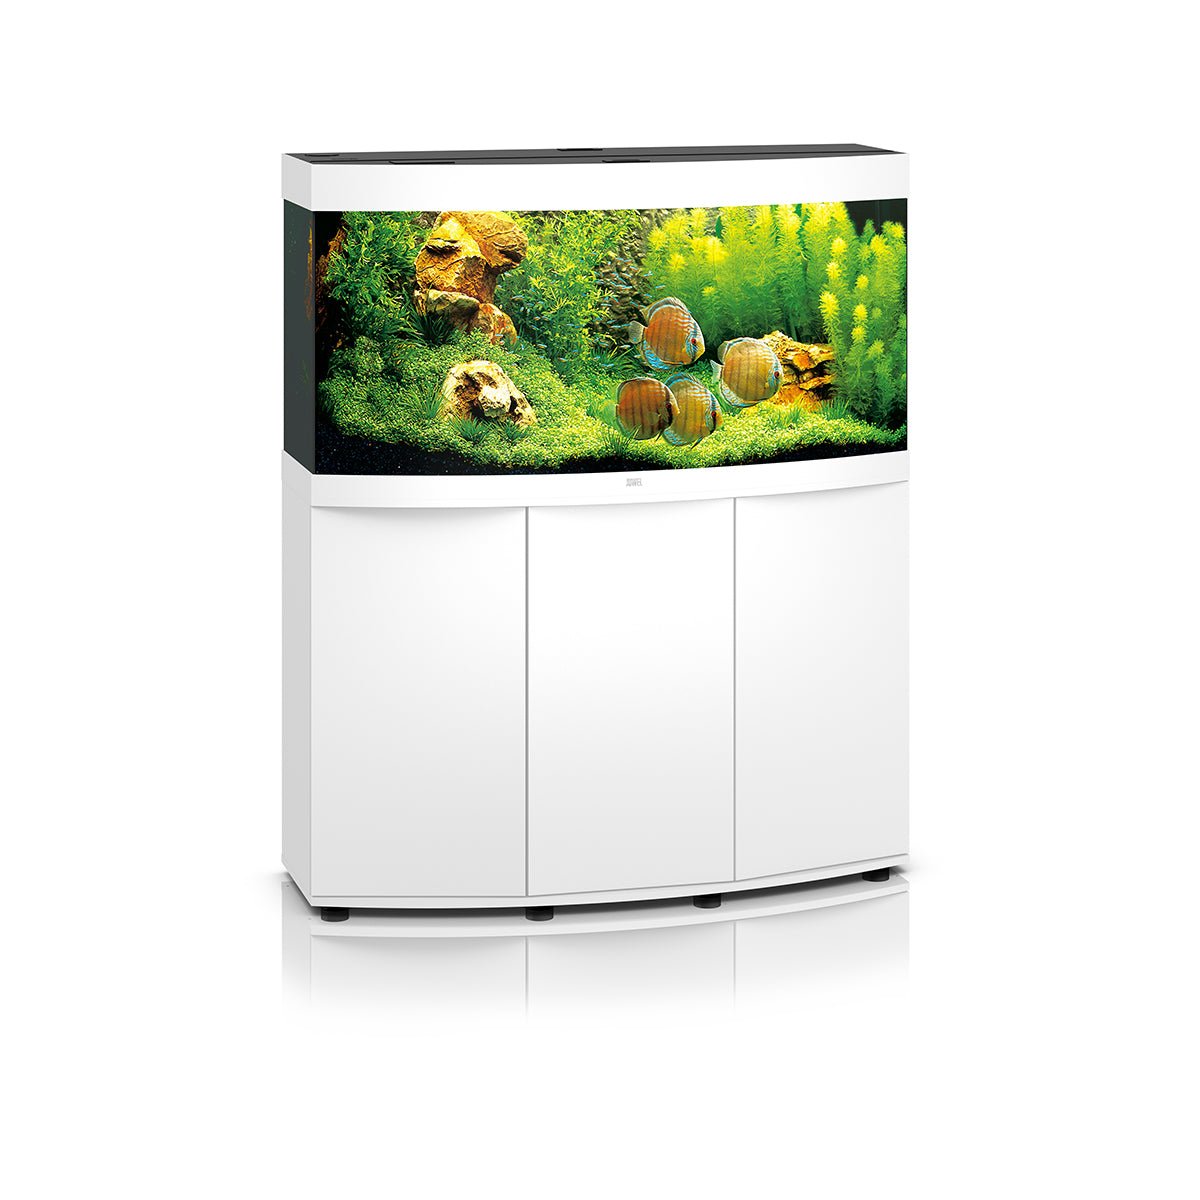 Juwel Vision 260 LED Aquarium and Cabinet (White) - Charterhouse Aquatics